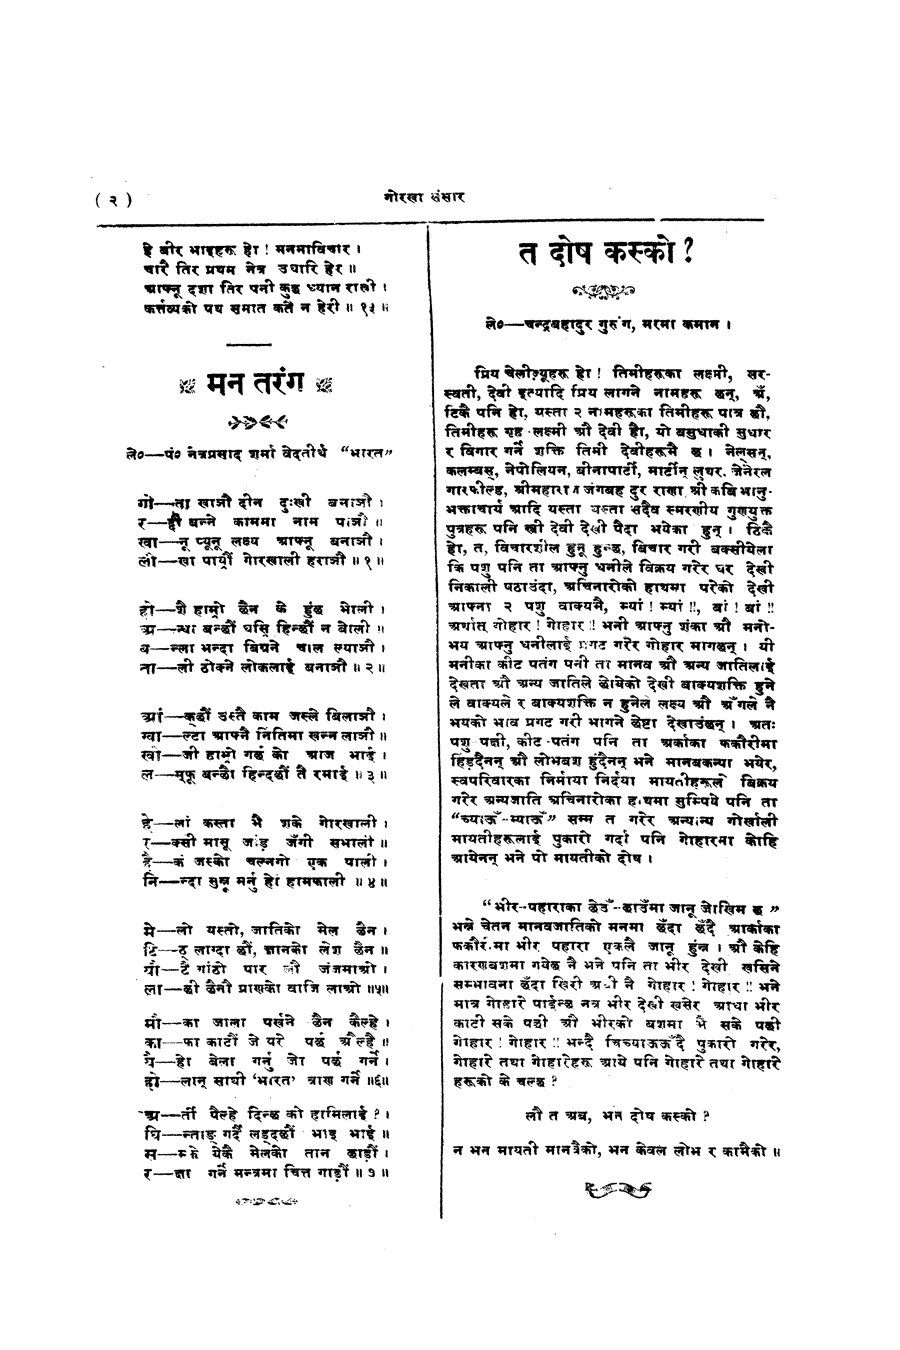 Gorkha Sansar, 20 Sept 1927, page 2